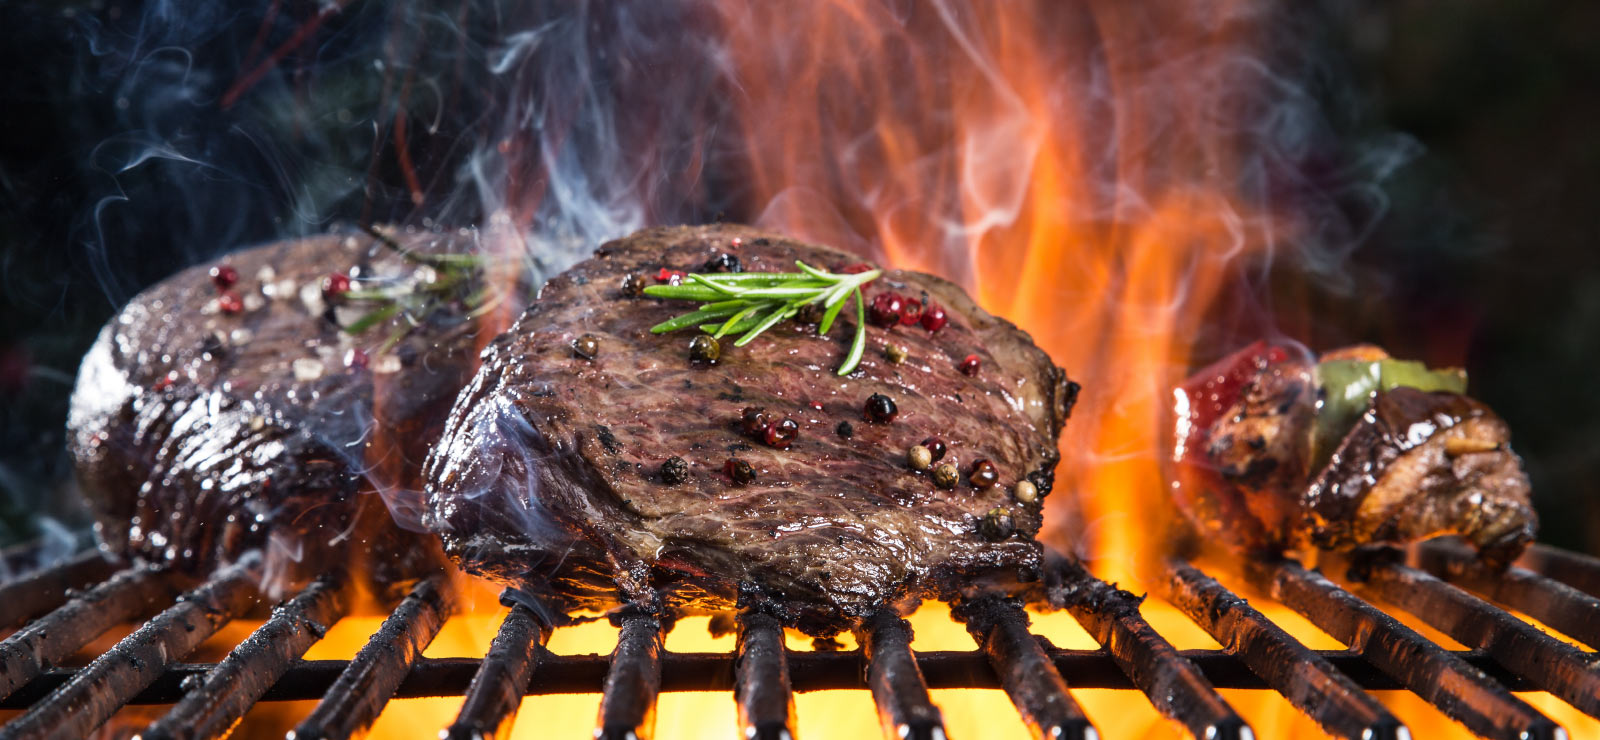 Steak on a grill